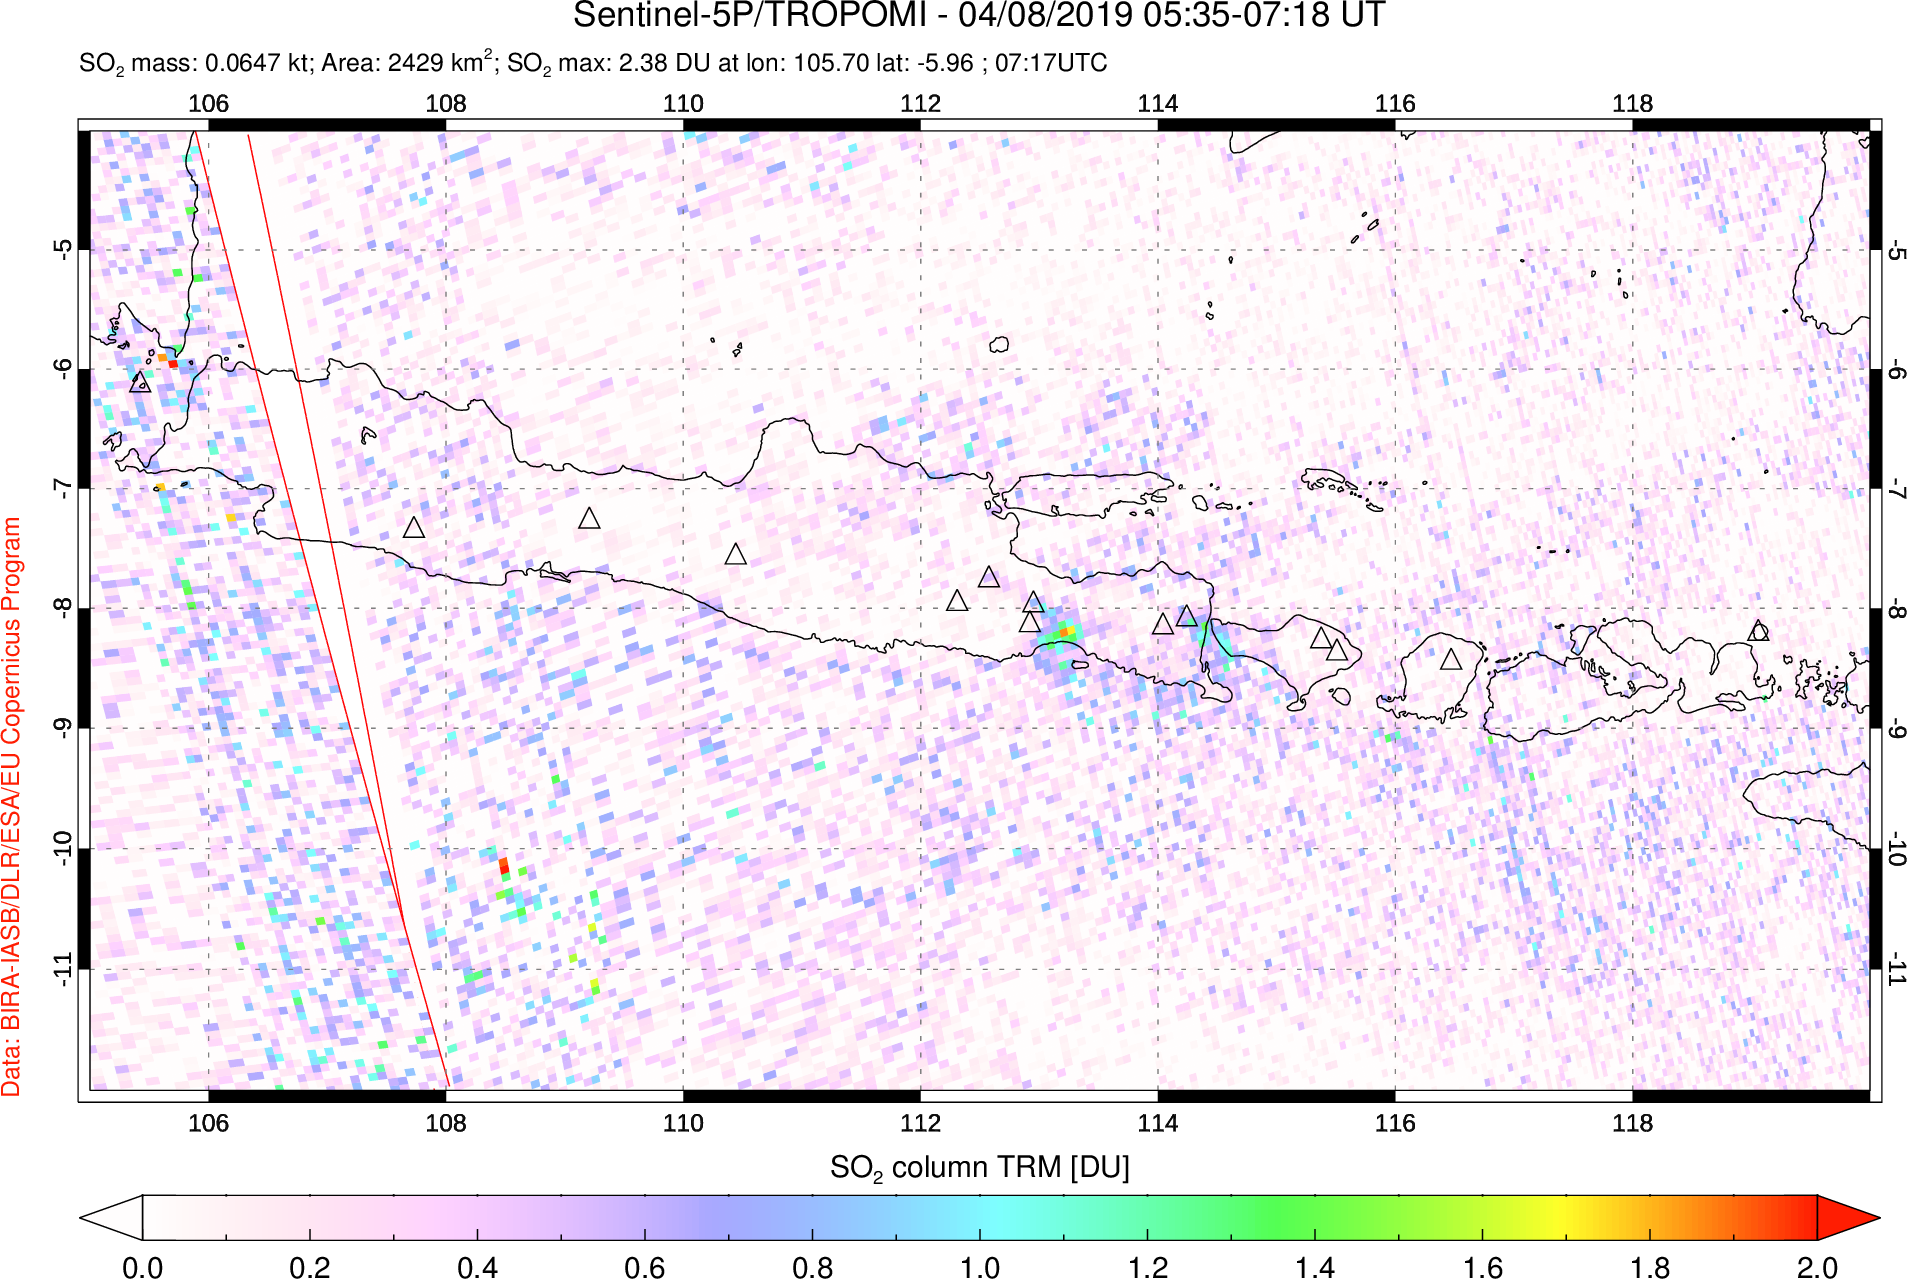 A sulfur dioxide image over Java, Indonesia on Apr 08, 2019.